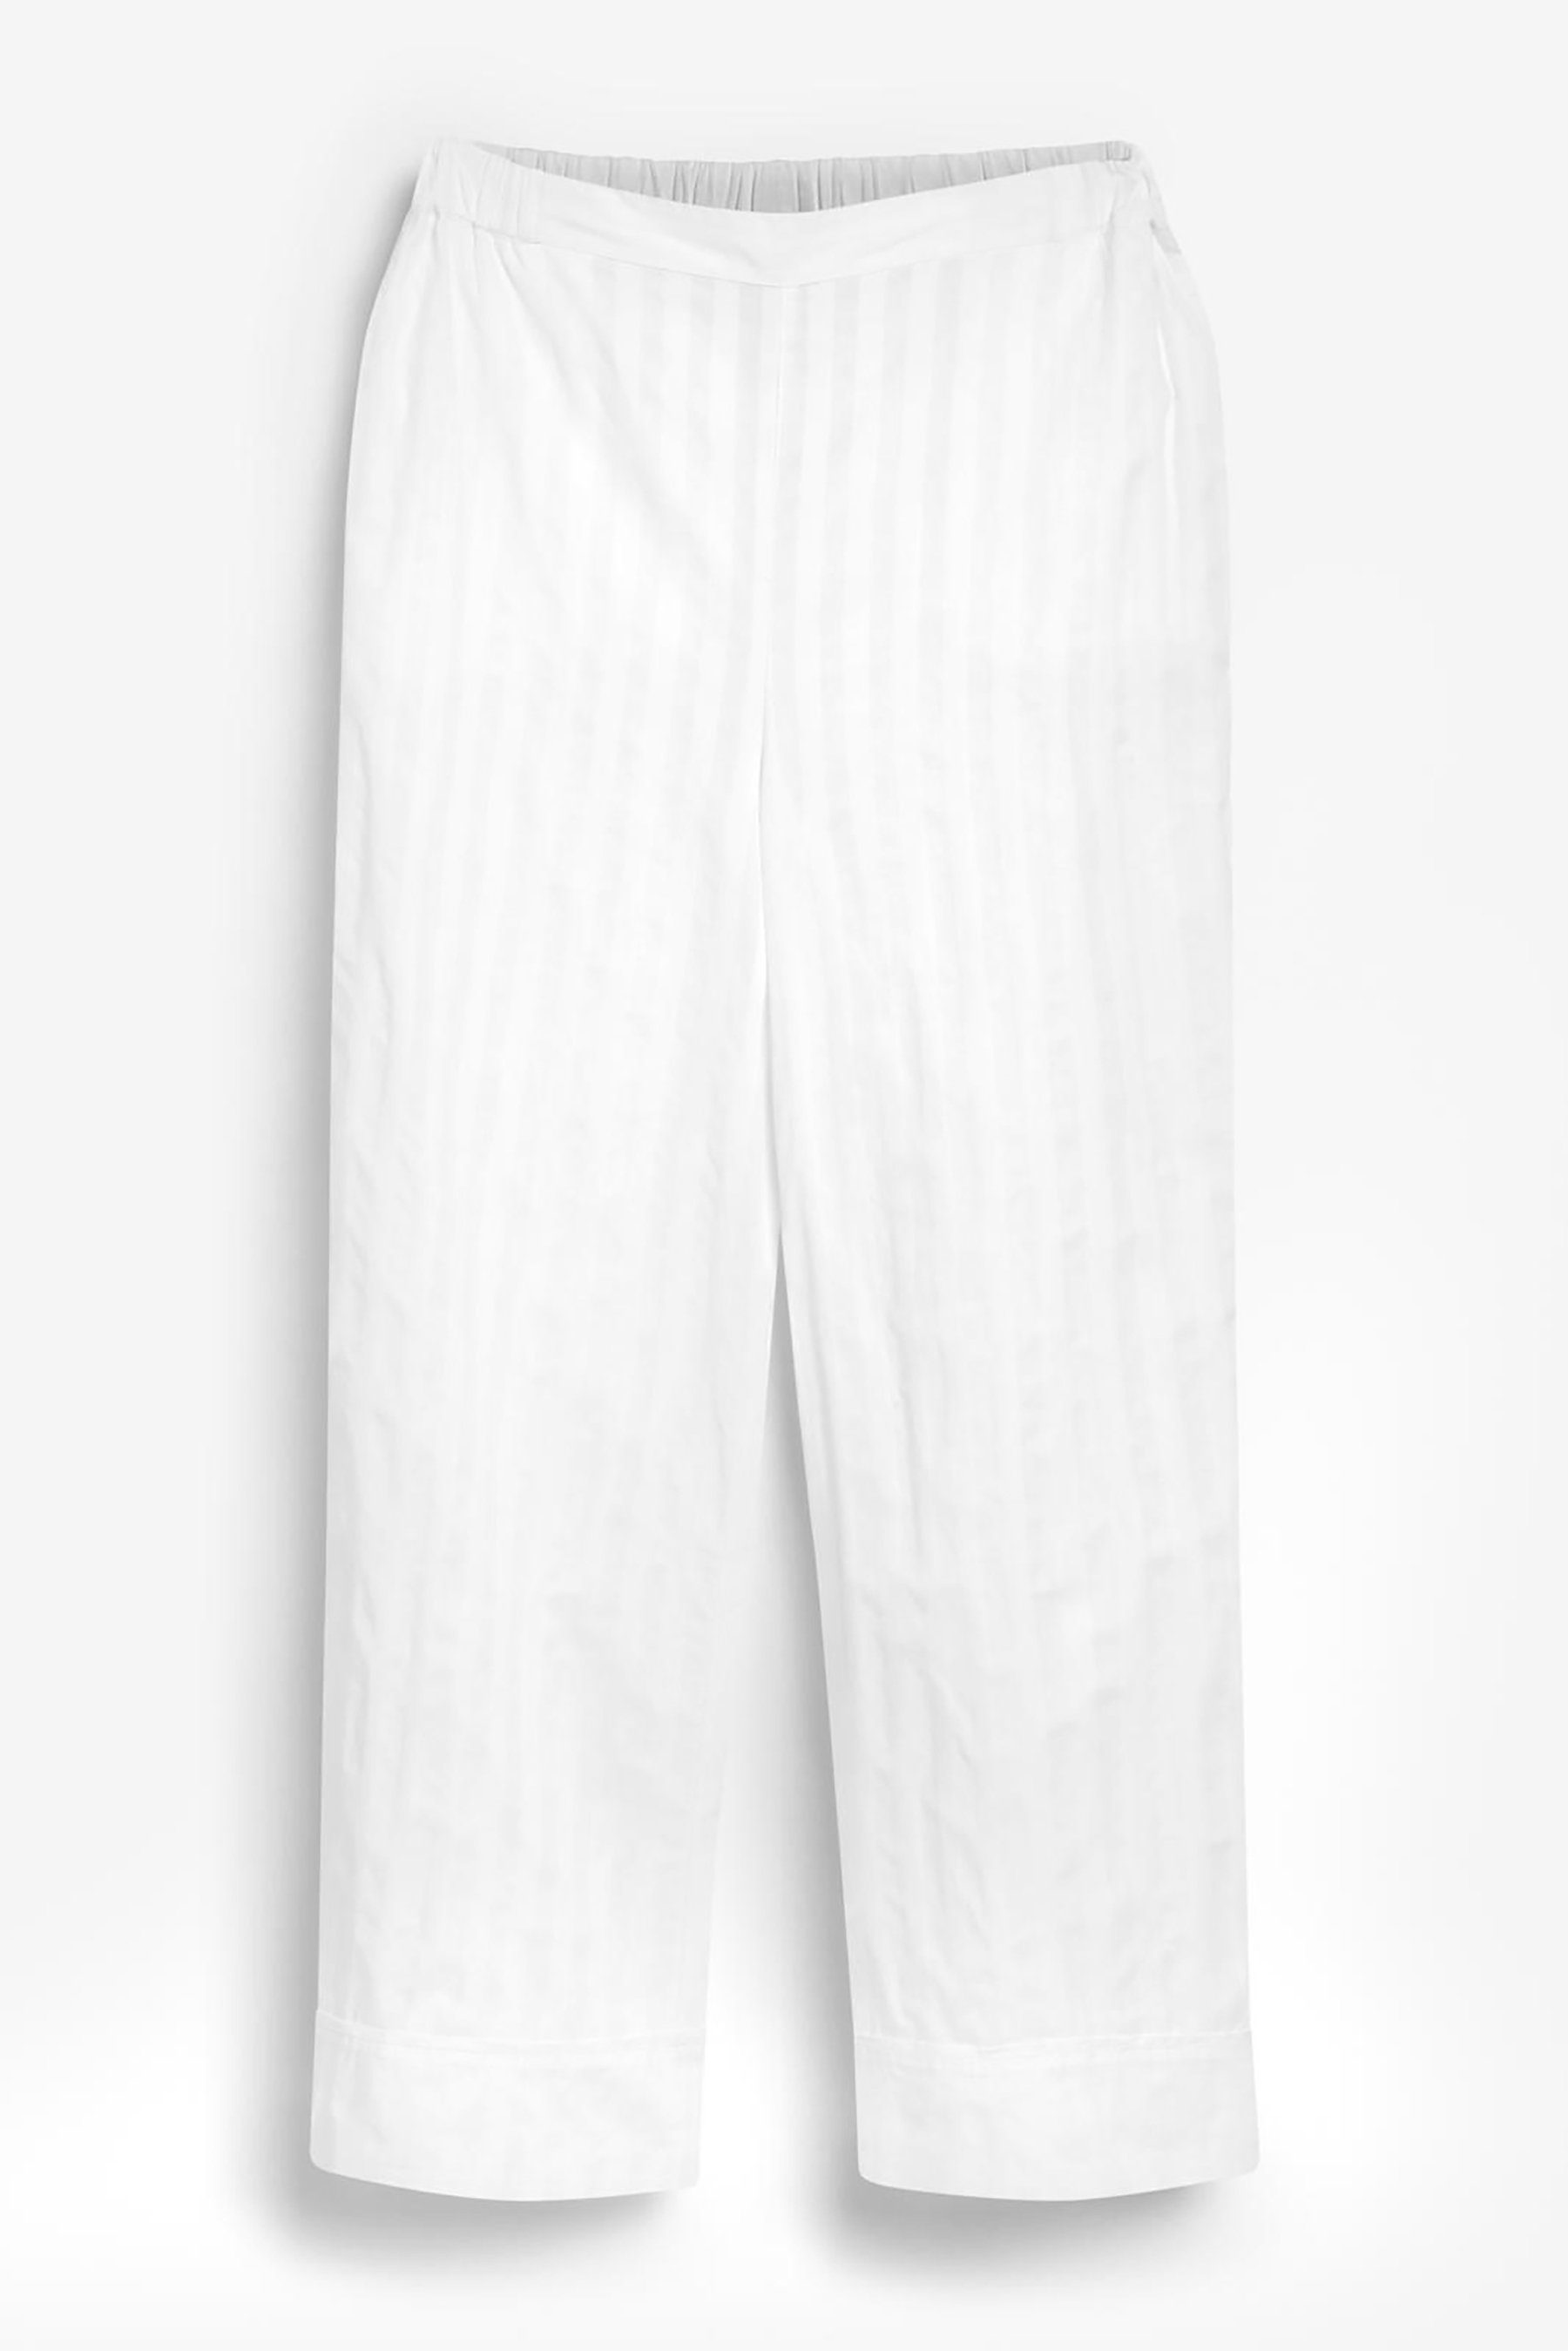 (2 White Baumwolle Collection Pyjama aus tlg) Pyjama-Set Premium Next Luxe